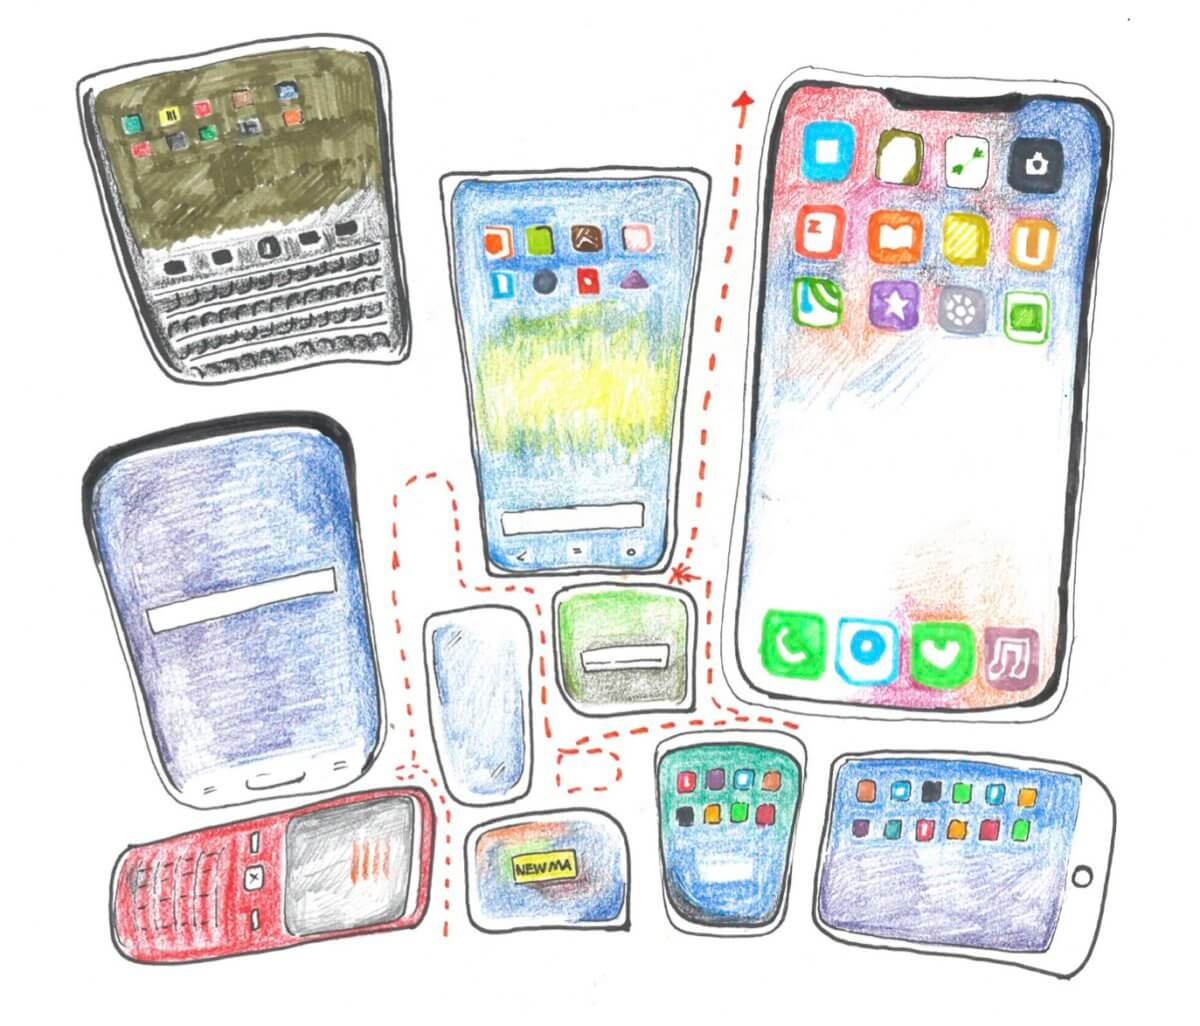 Pencil sketch of various models of mobile phones